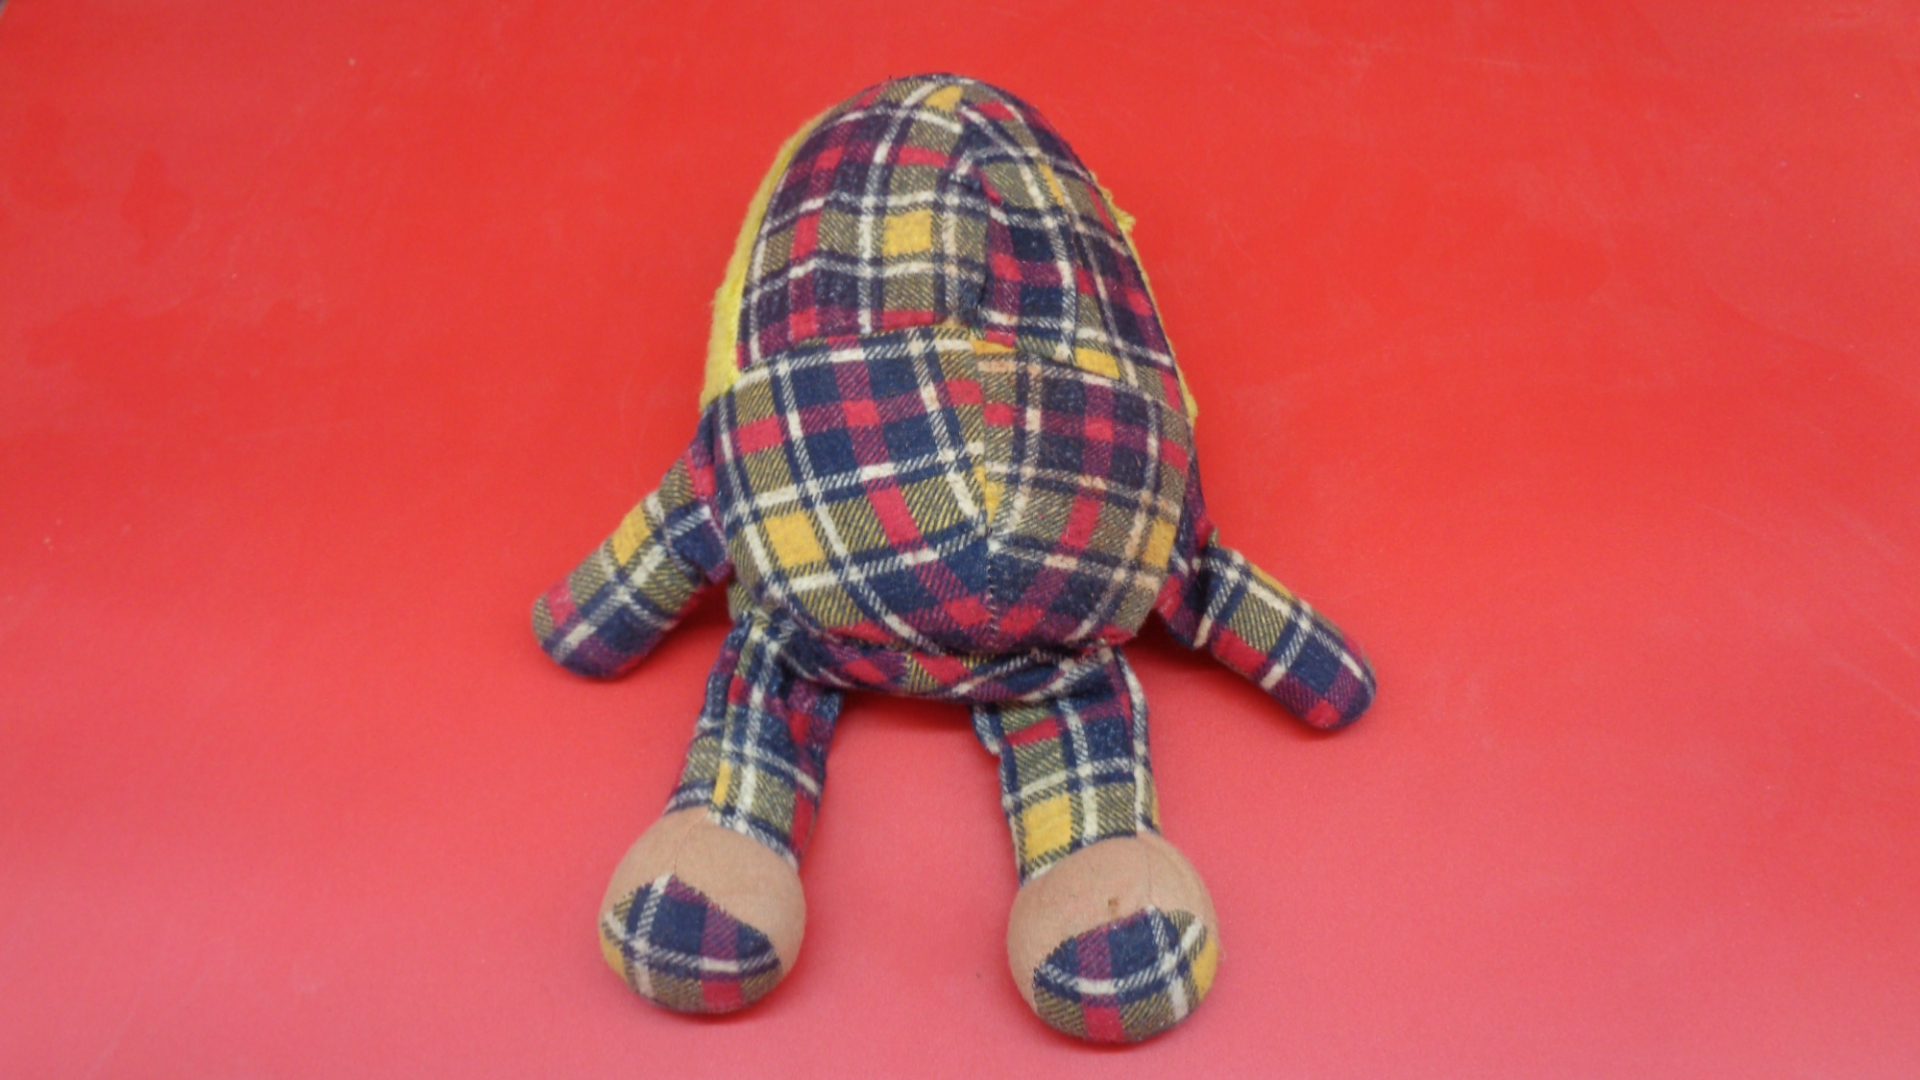 Display of rear view of Plush Humpty Dumpty Doll